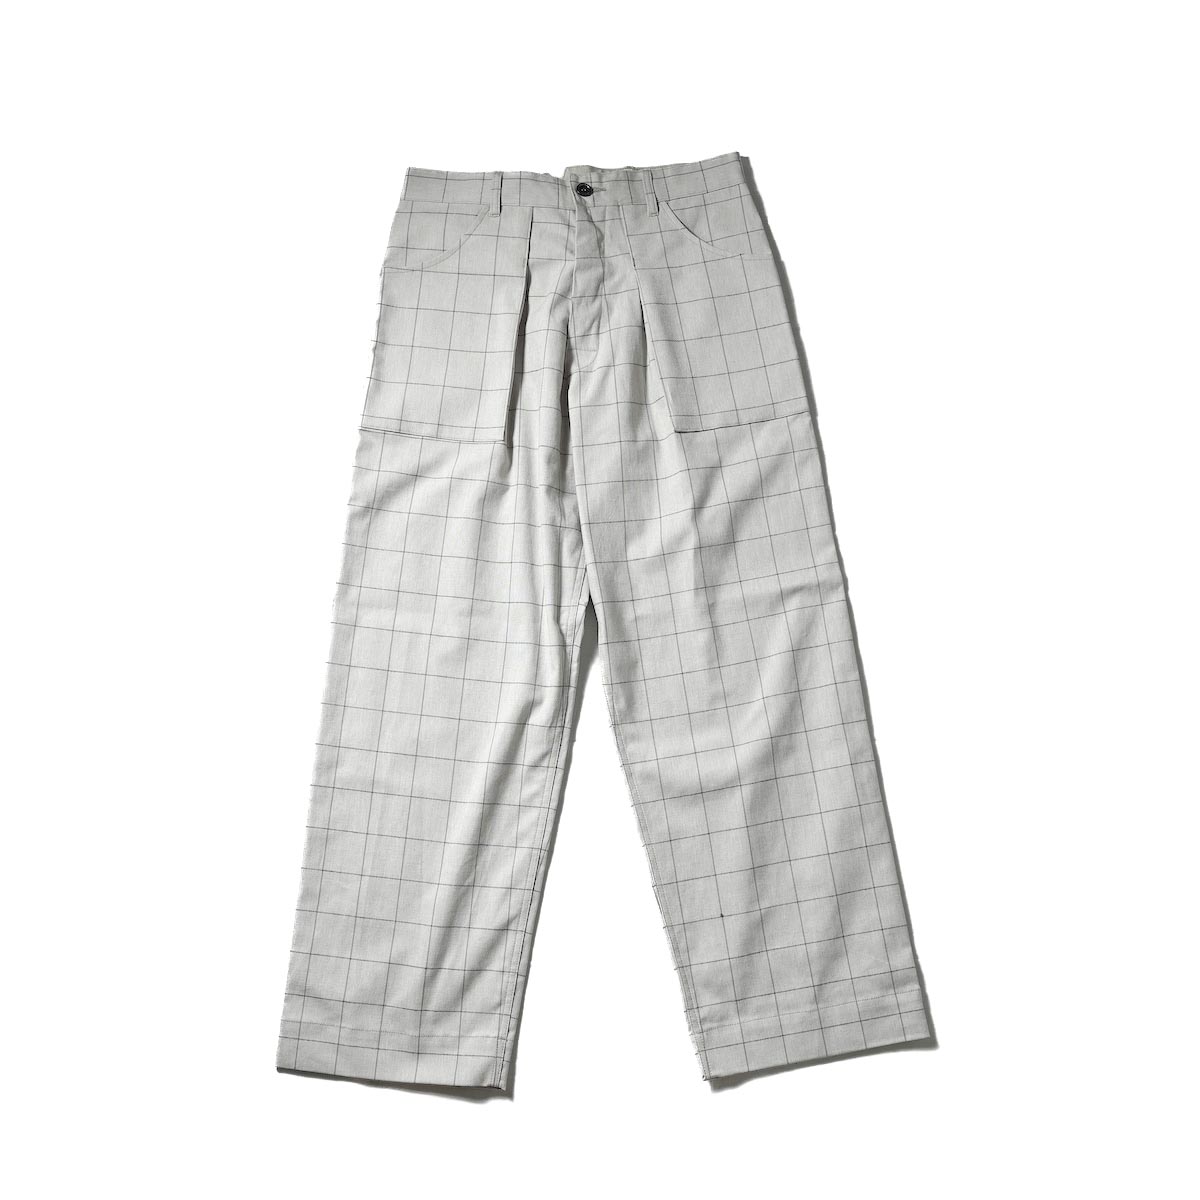 Willow Pants / P-001 Dead Stock Gray Check Pants